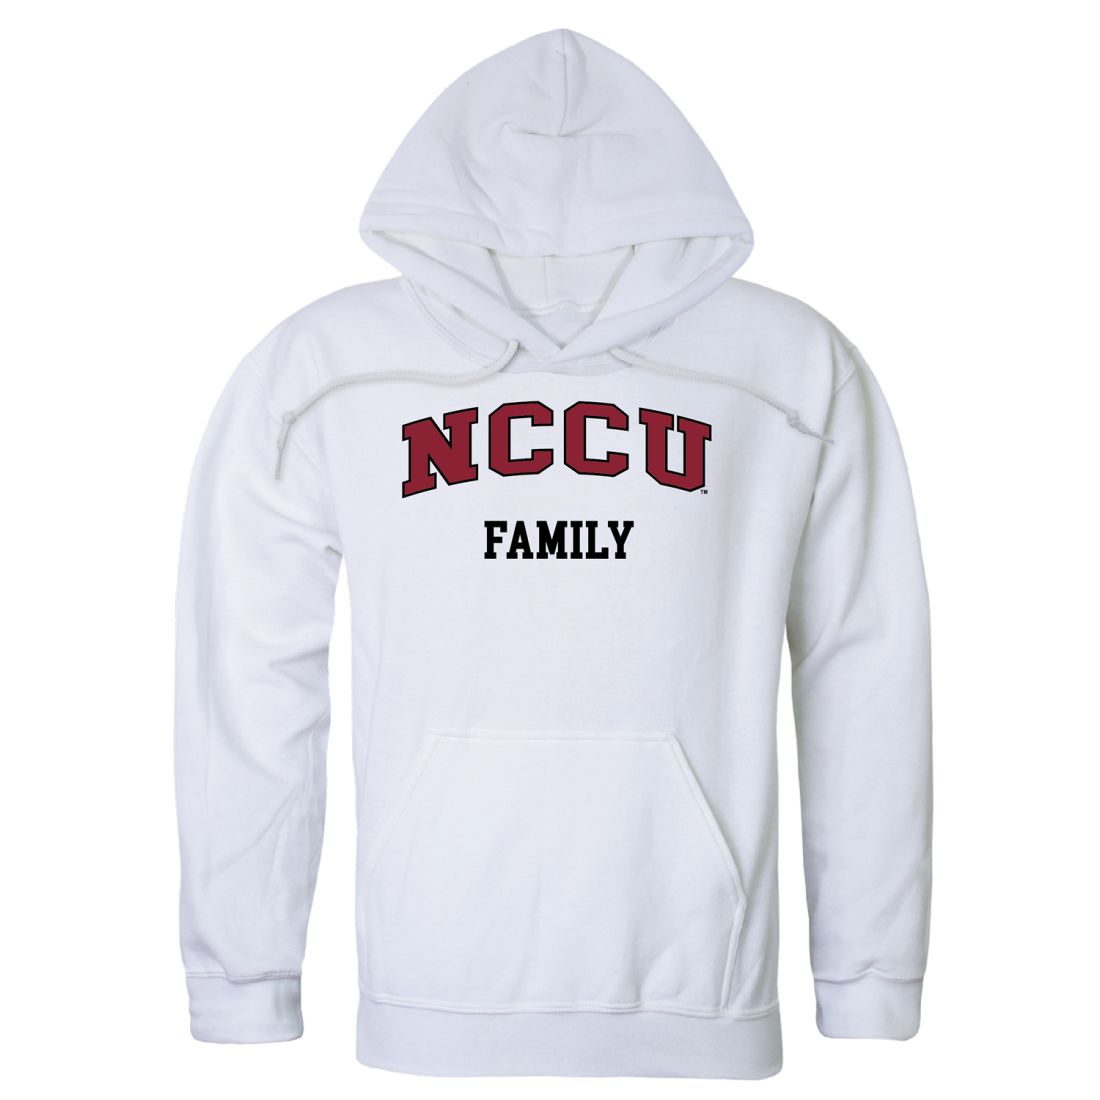 NCCU North Carolina Central University Eagles Family Hoodie Sweatshirts